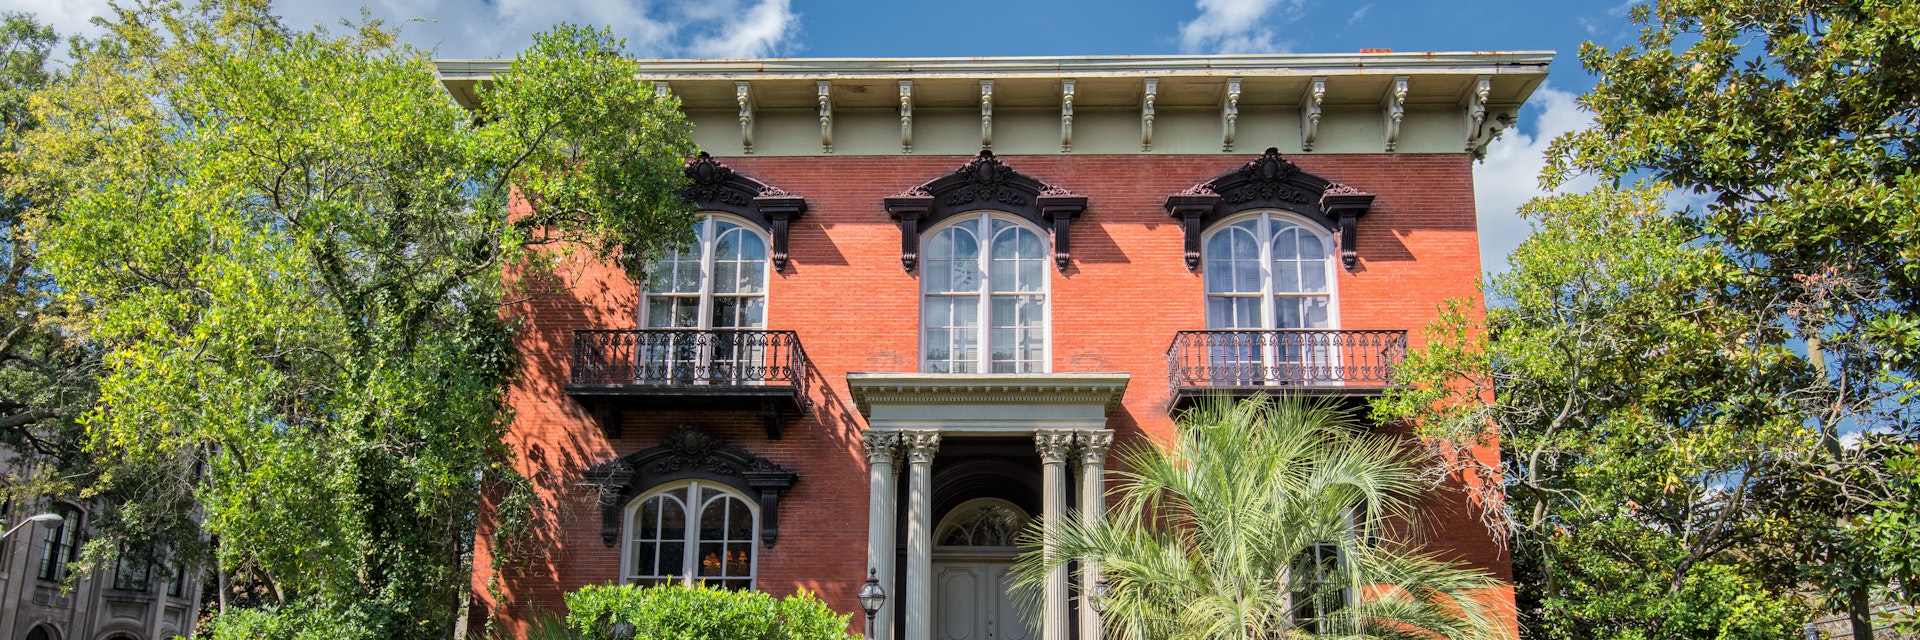 The Mercer Williams House in Savannah.